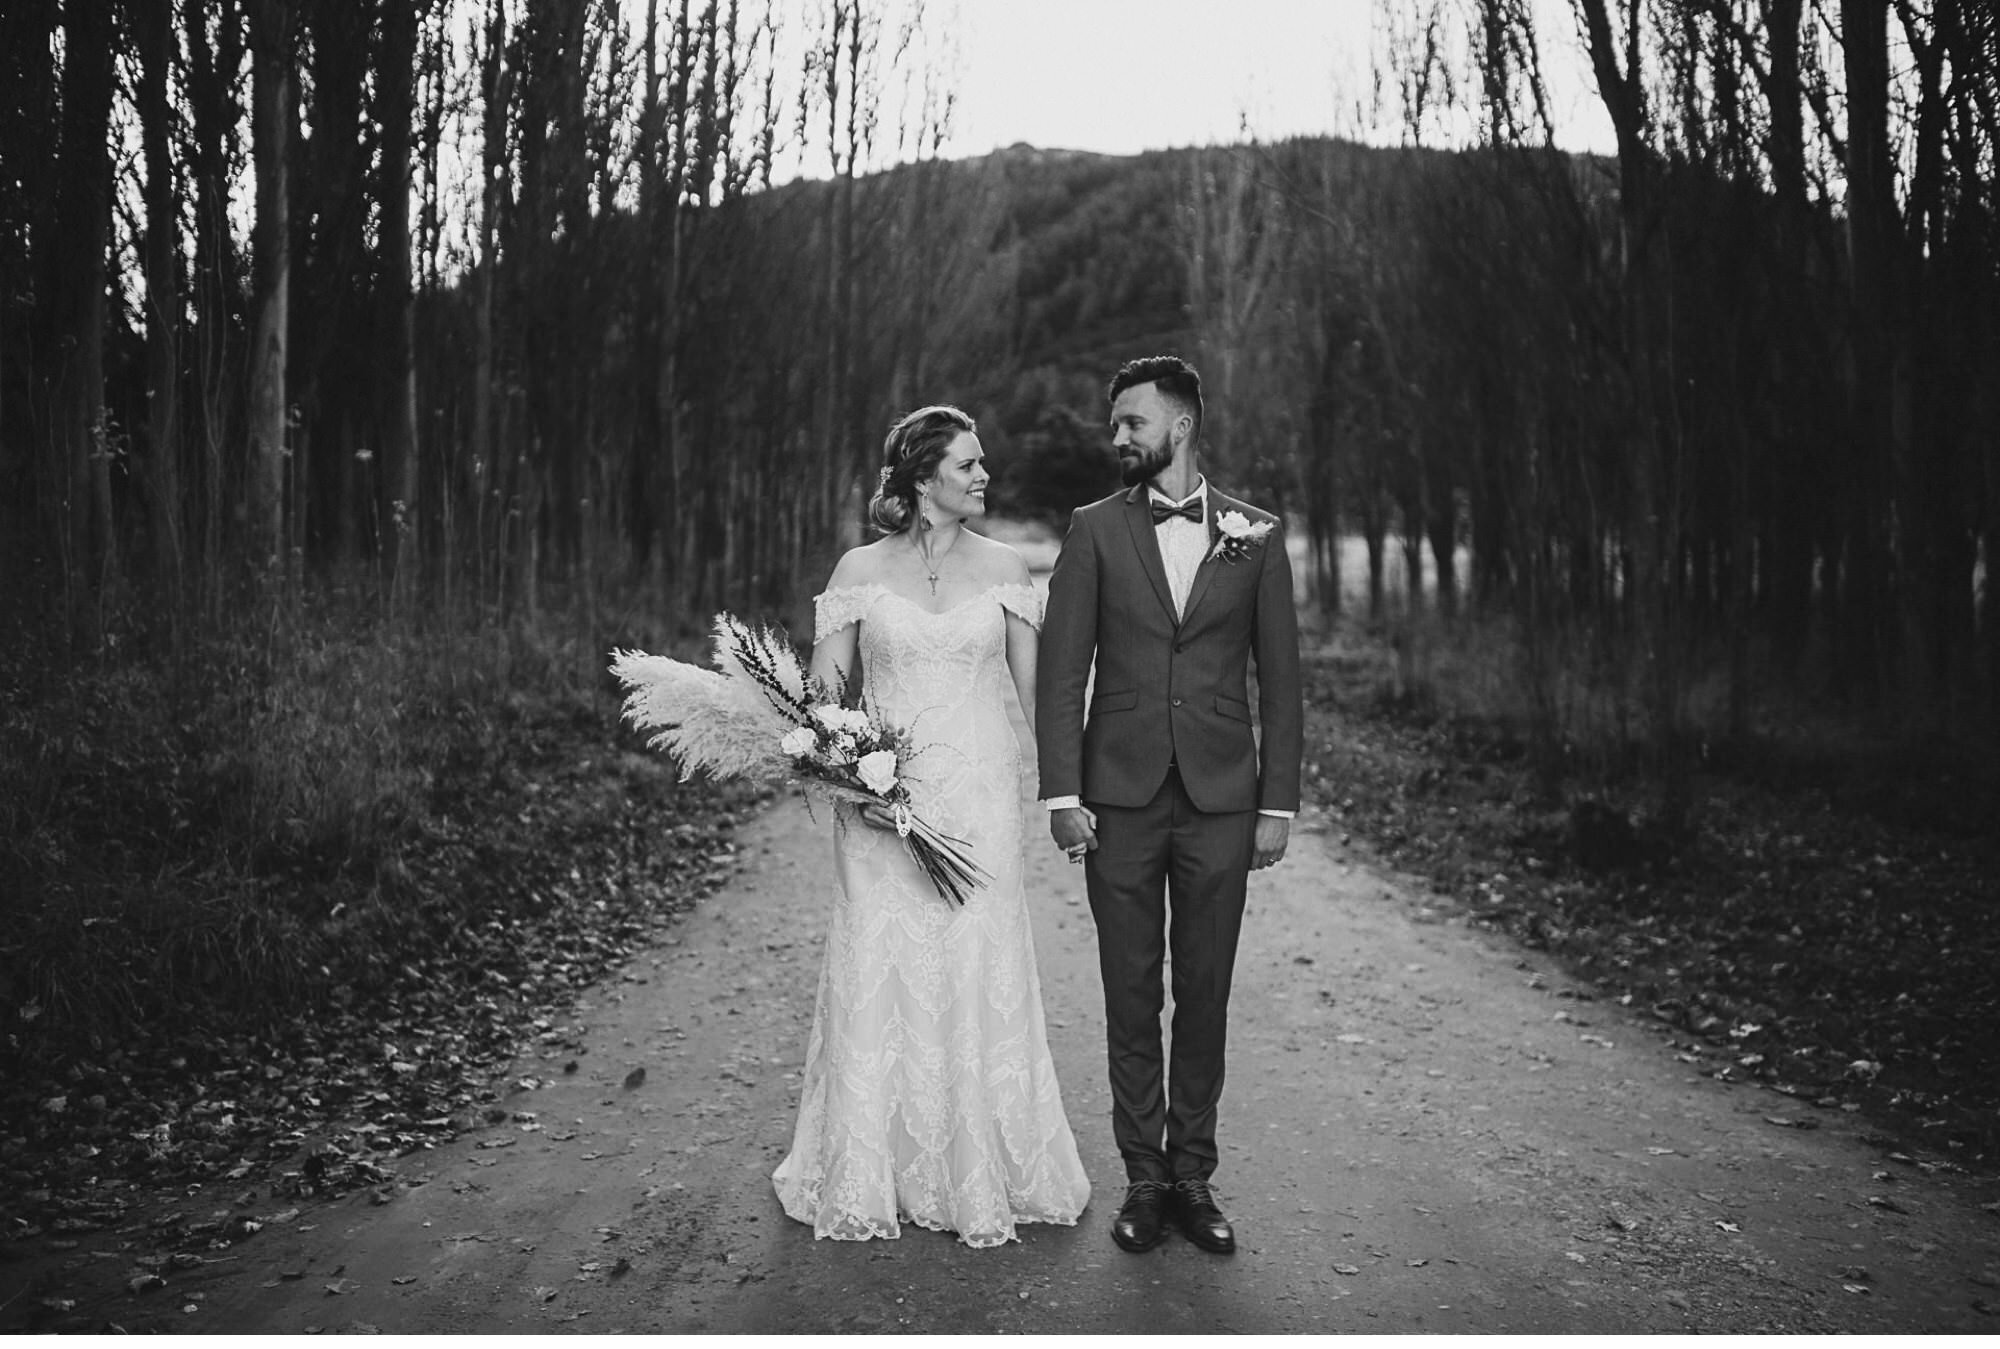 030 - New Zealand Wedding Photography Highlights.jpg